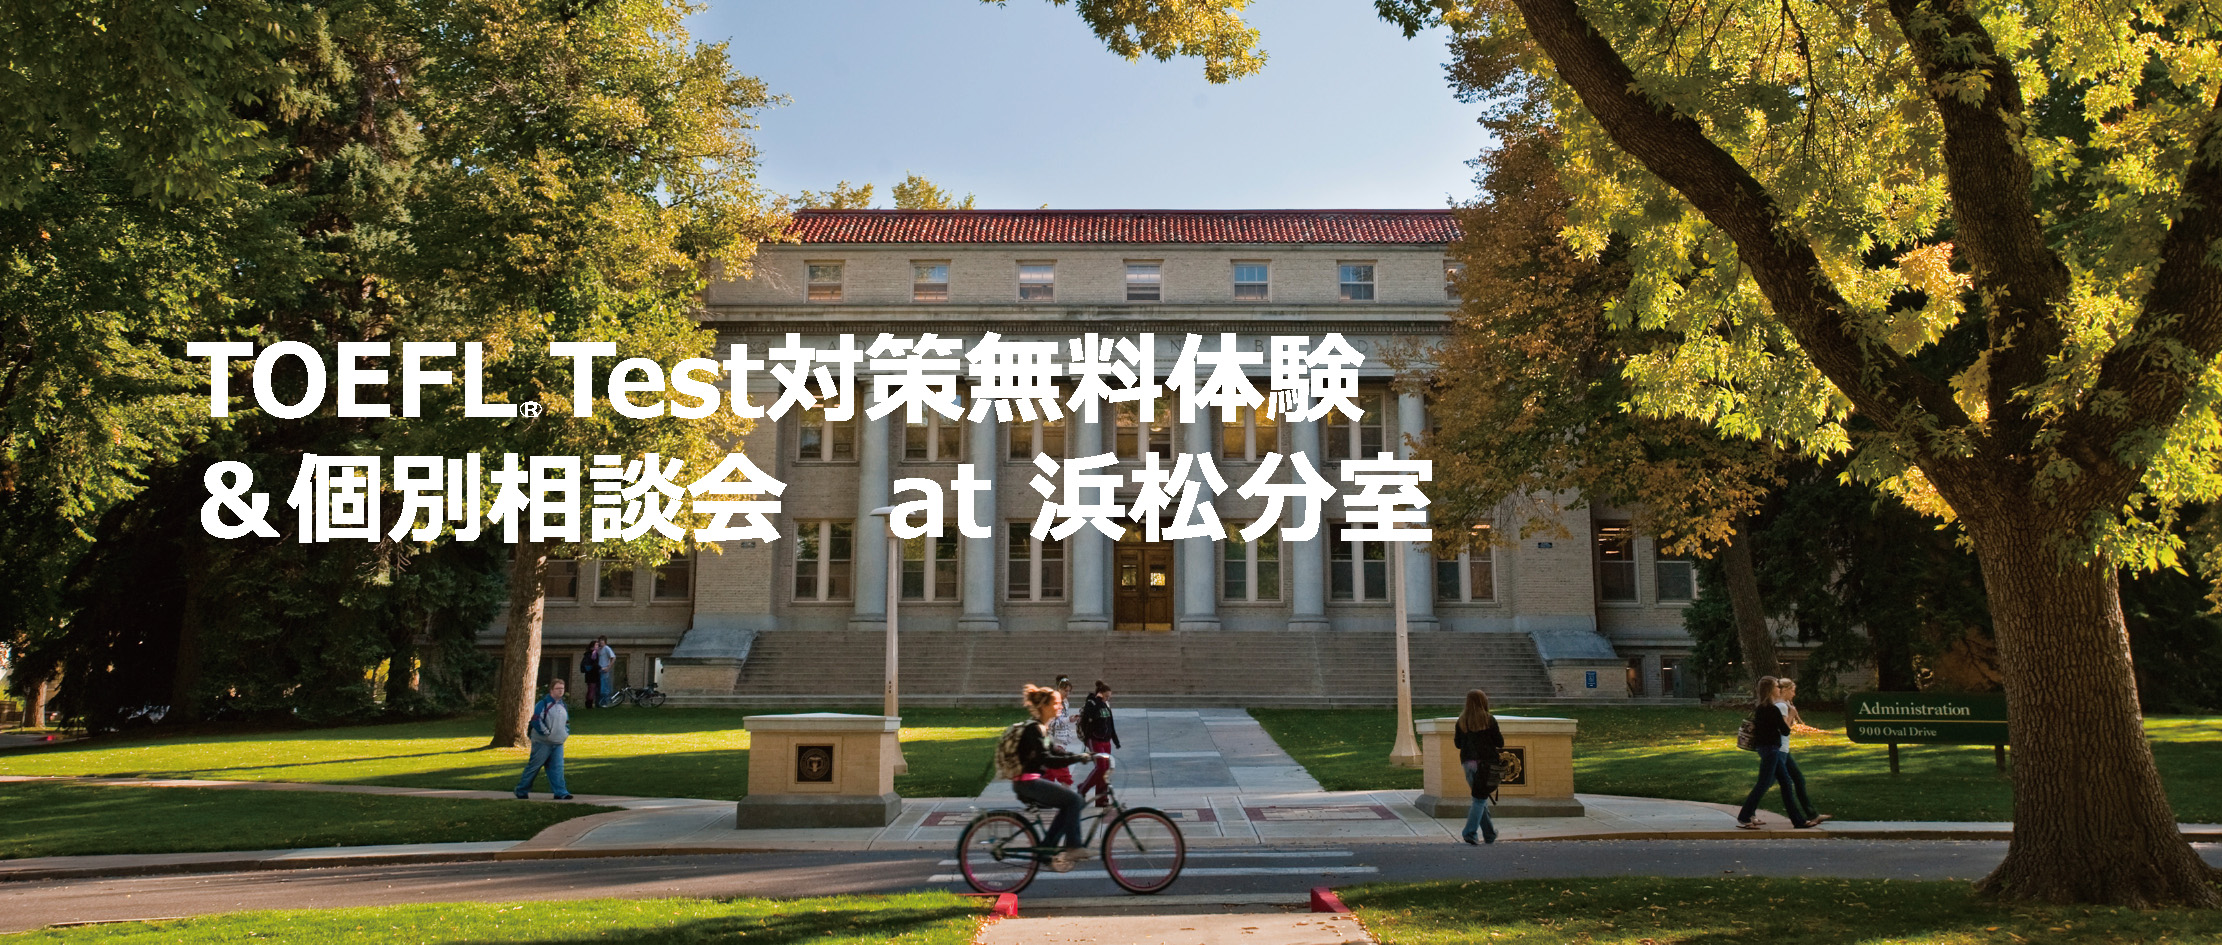 TOEFLiBT®Test対策無料体験授業＆個別相談会！！ at 浜松分室